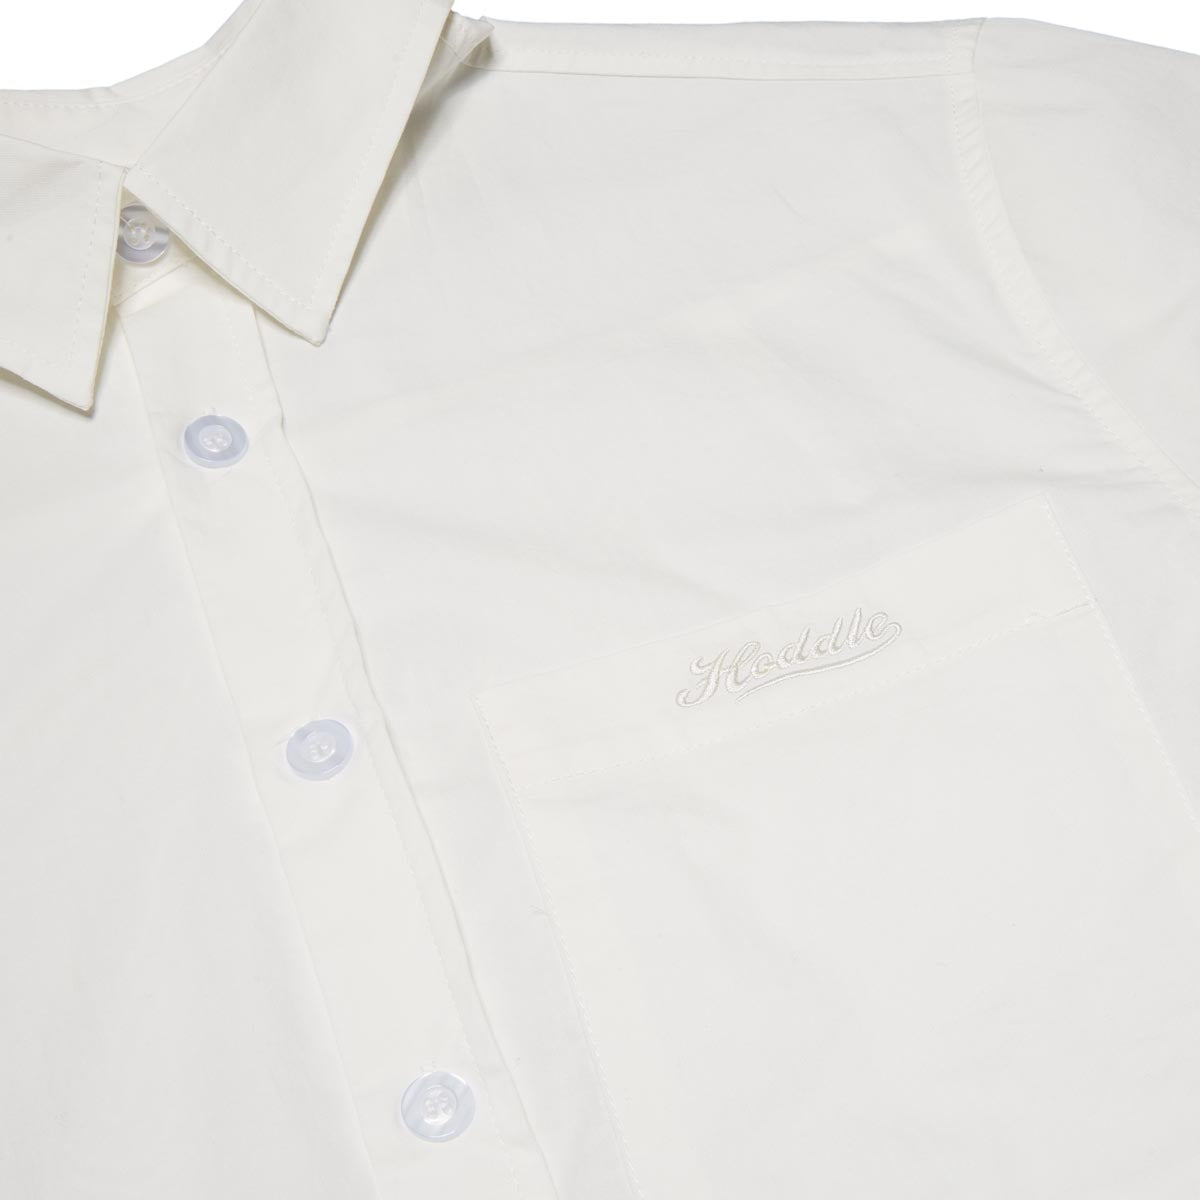 Hoddle Cheval Shirt - White image 4